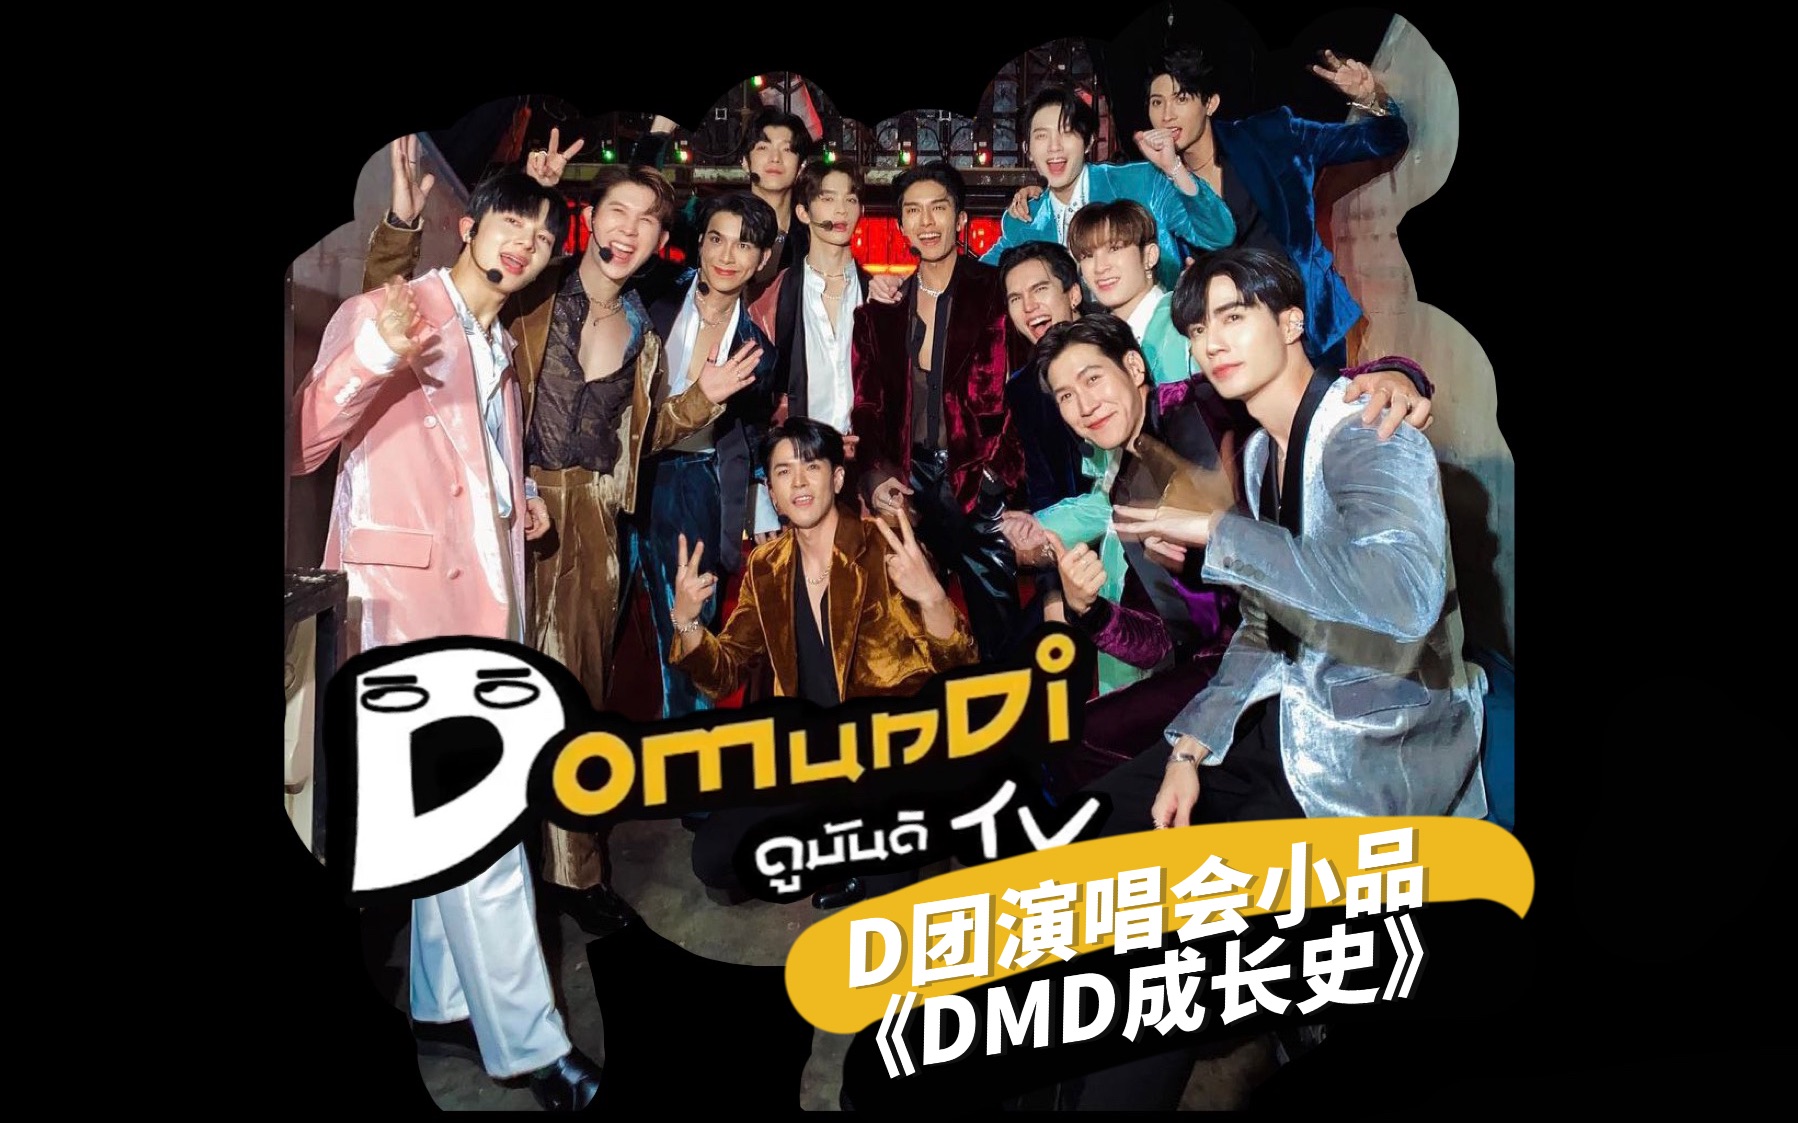 【D团中字】DMD Land演唱会小品之《DMD成长史》完整版(高清)